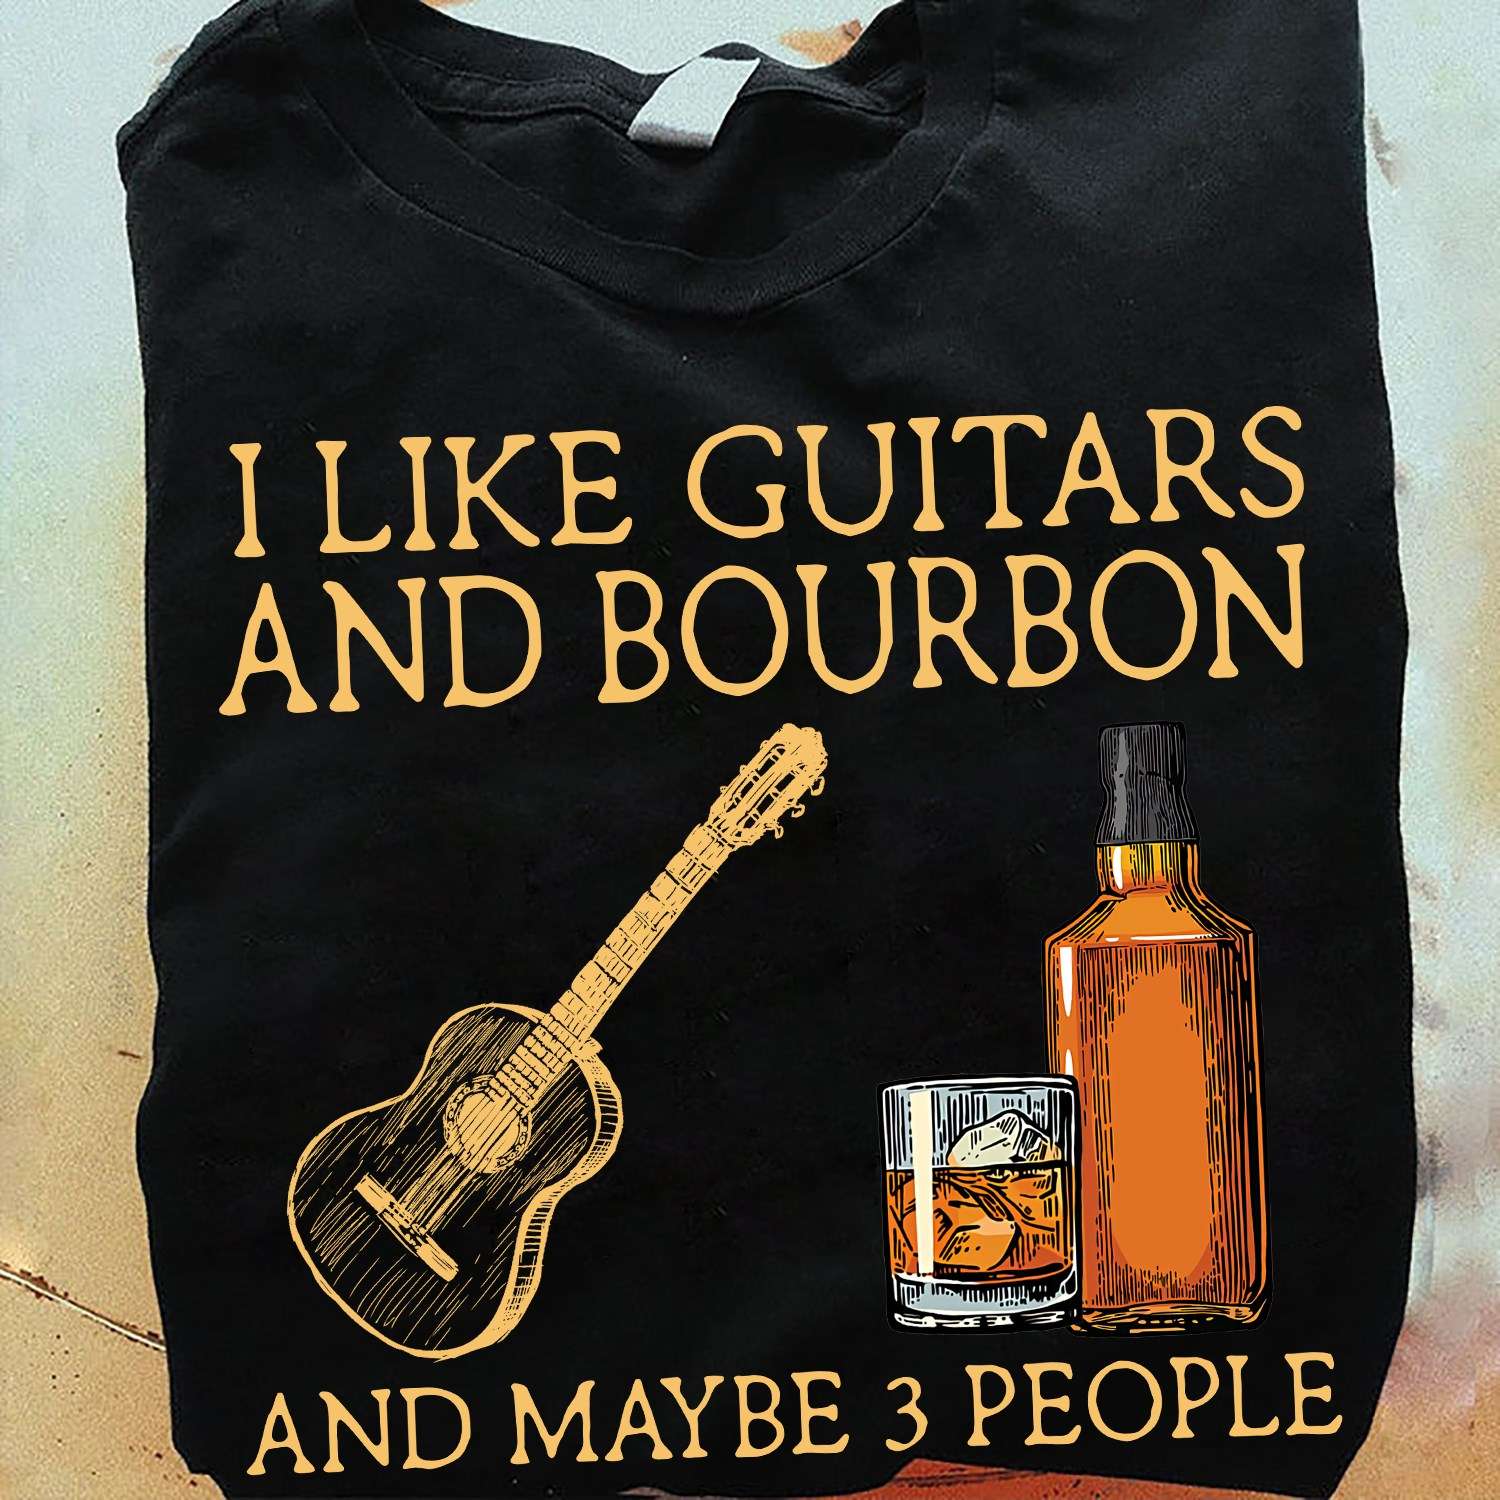 Guitars Bourbon - I like guitars and bourbon and maybe 3 people